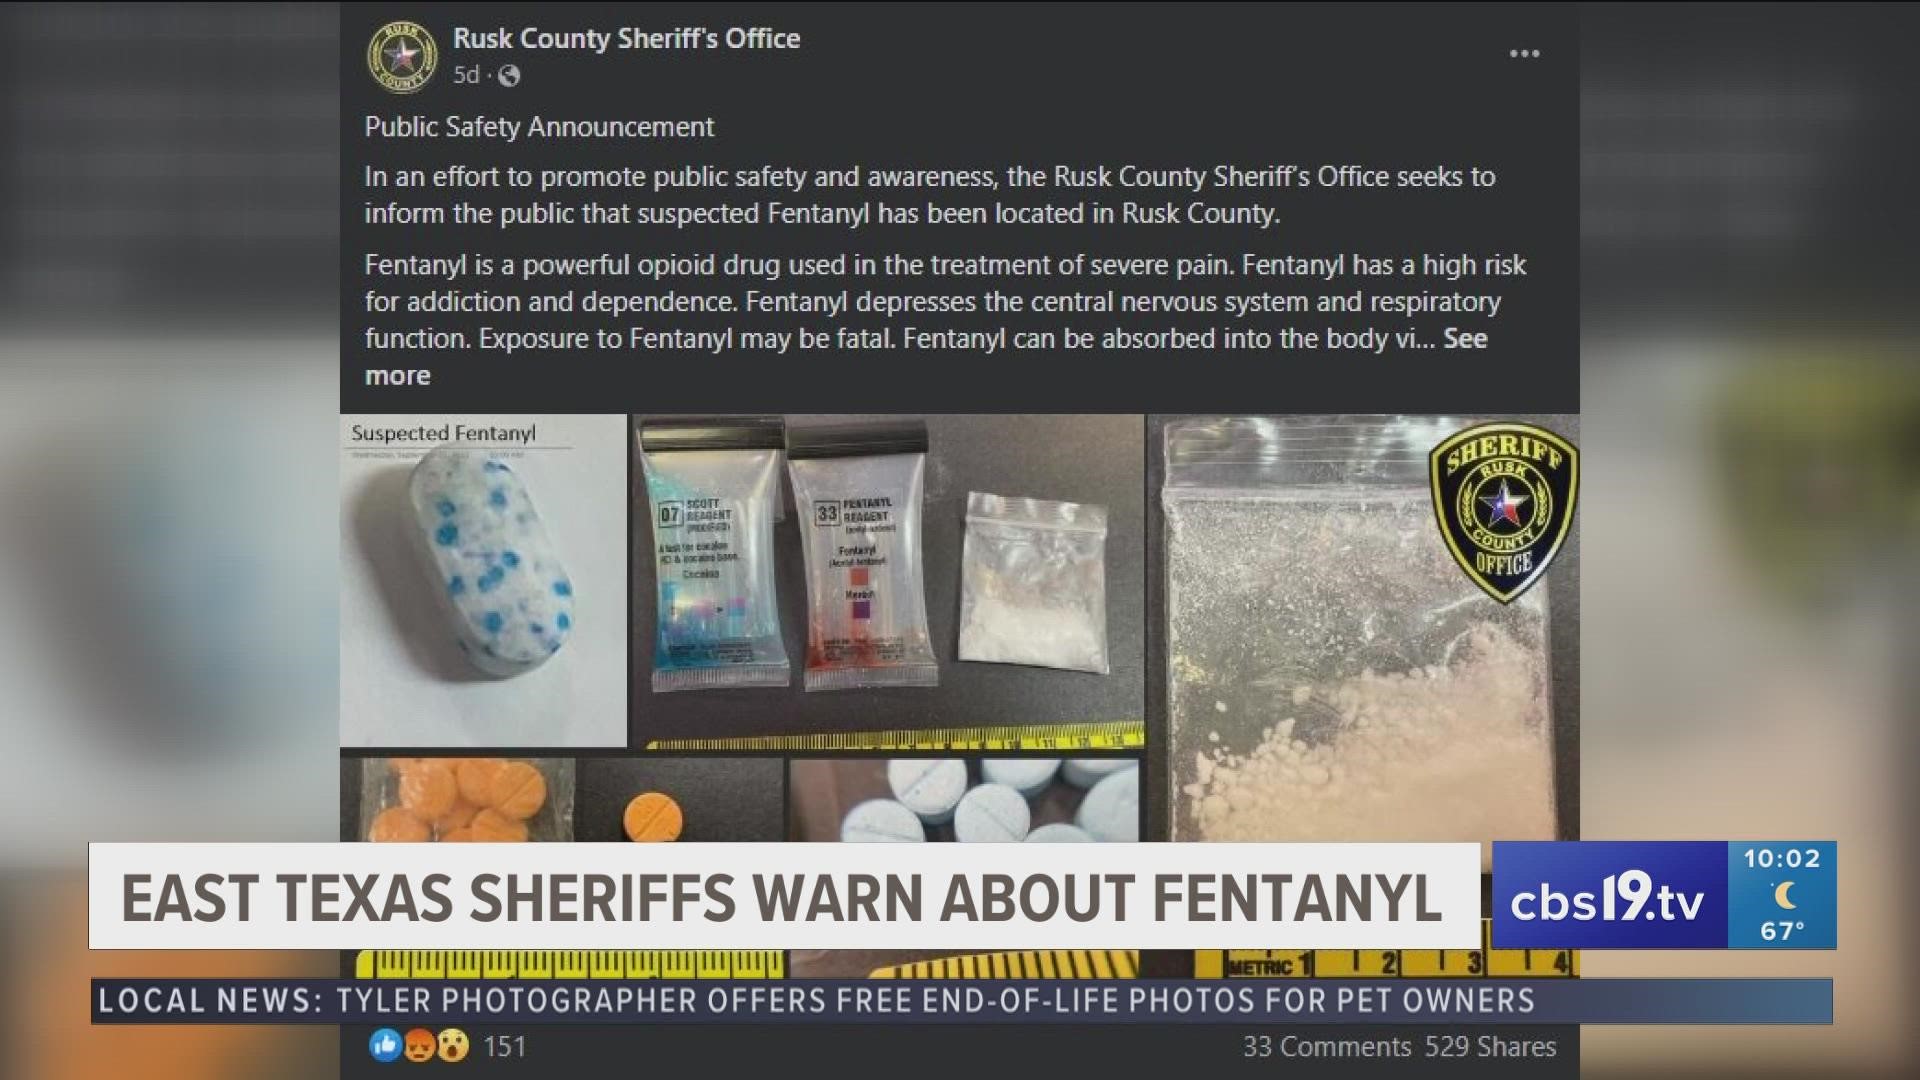 East Texas sheriffs warn about fentanyl